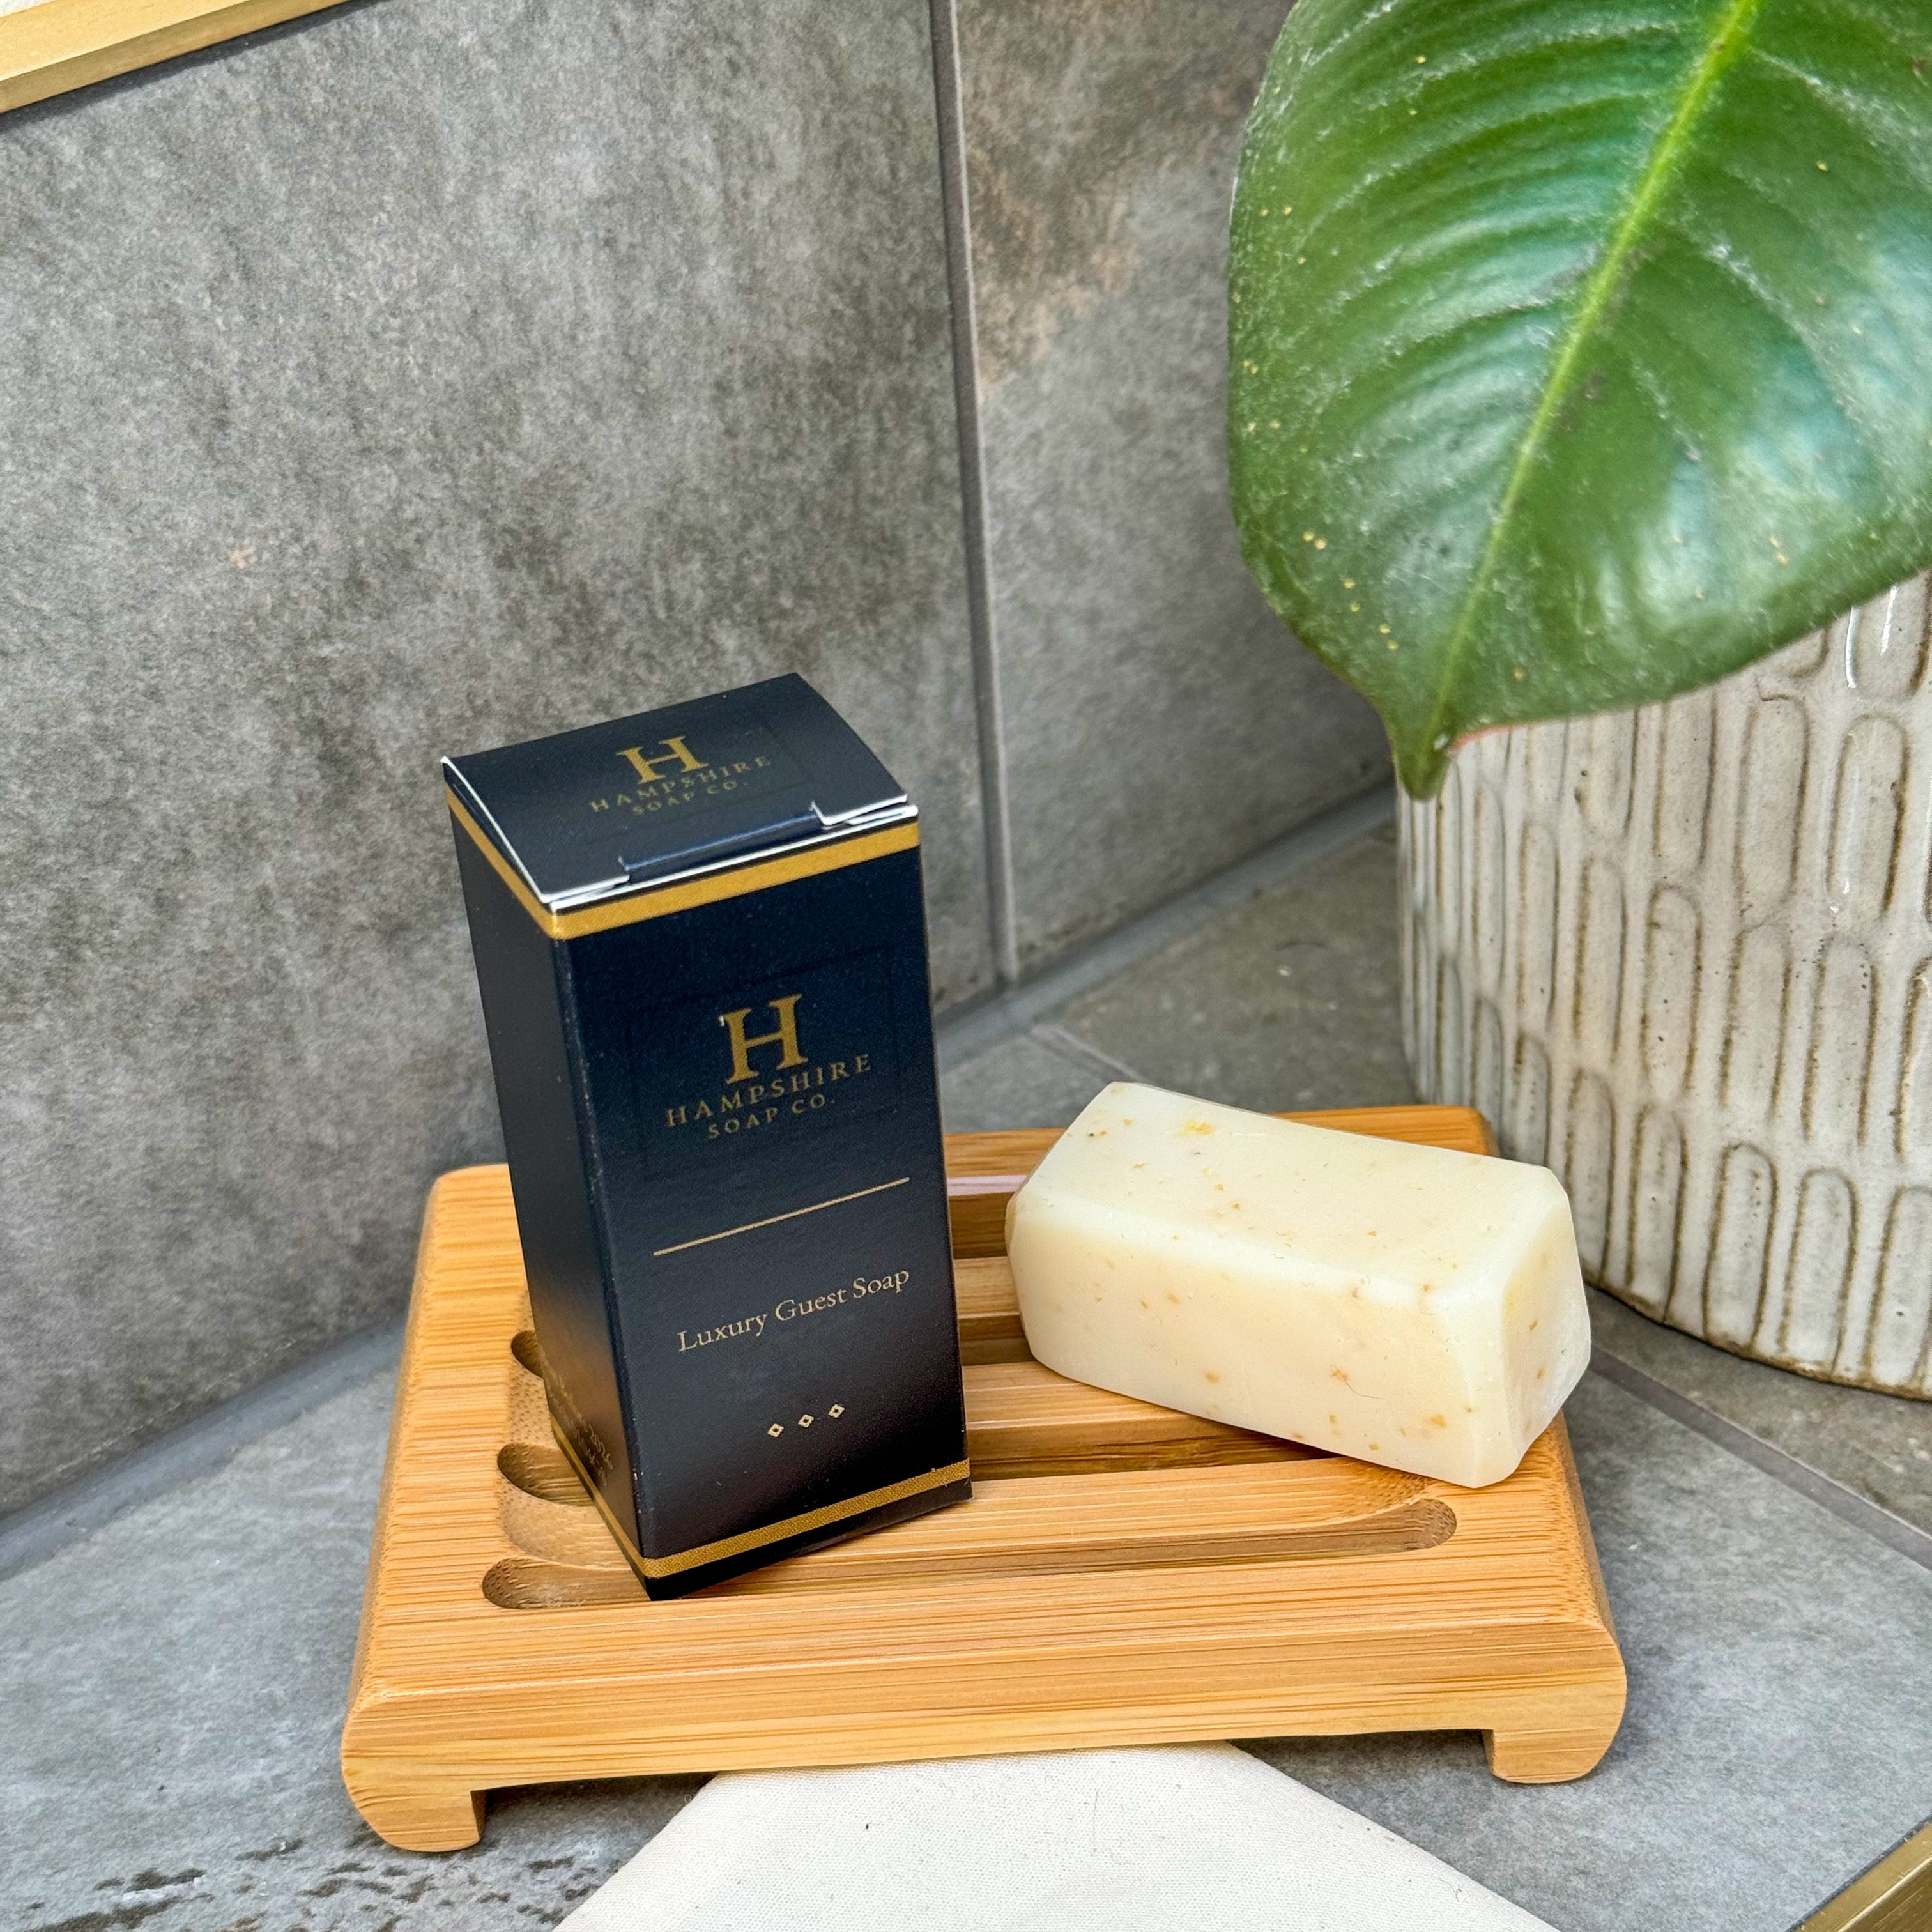 10 Luxury Guest Soap